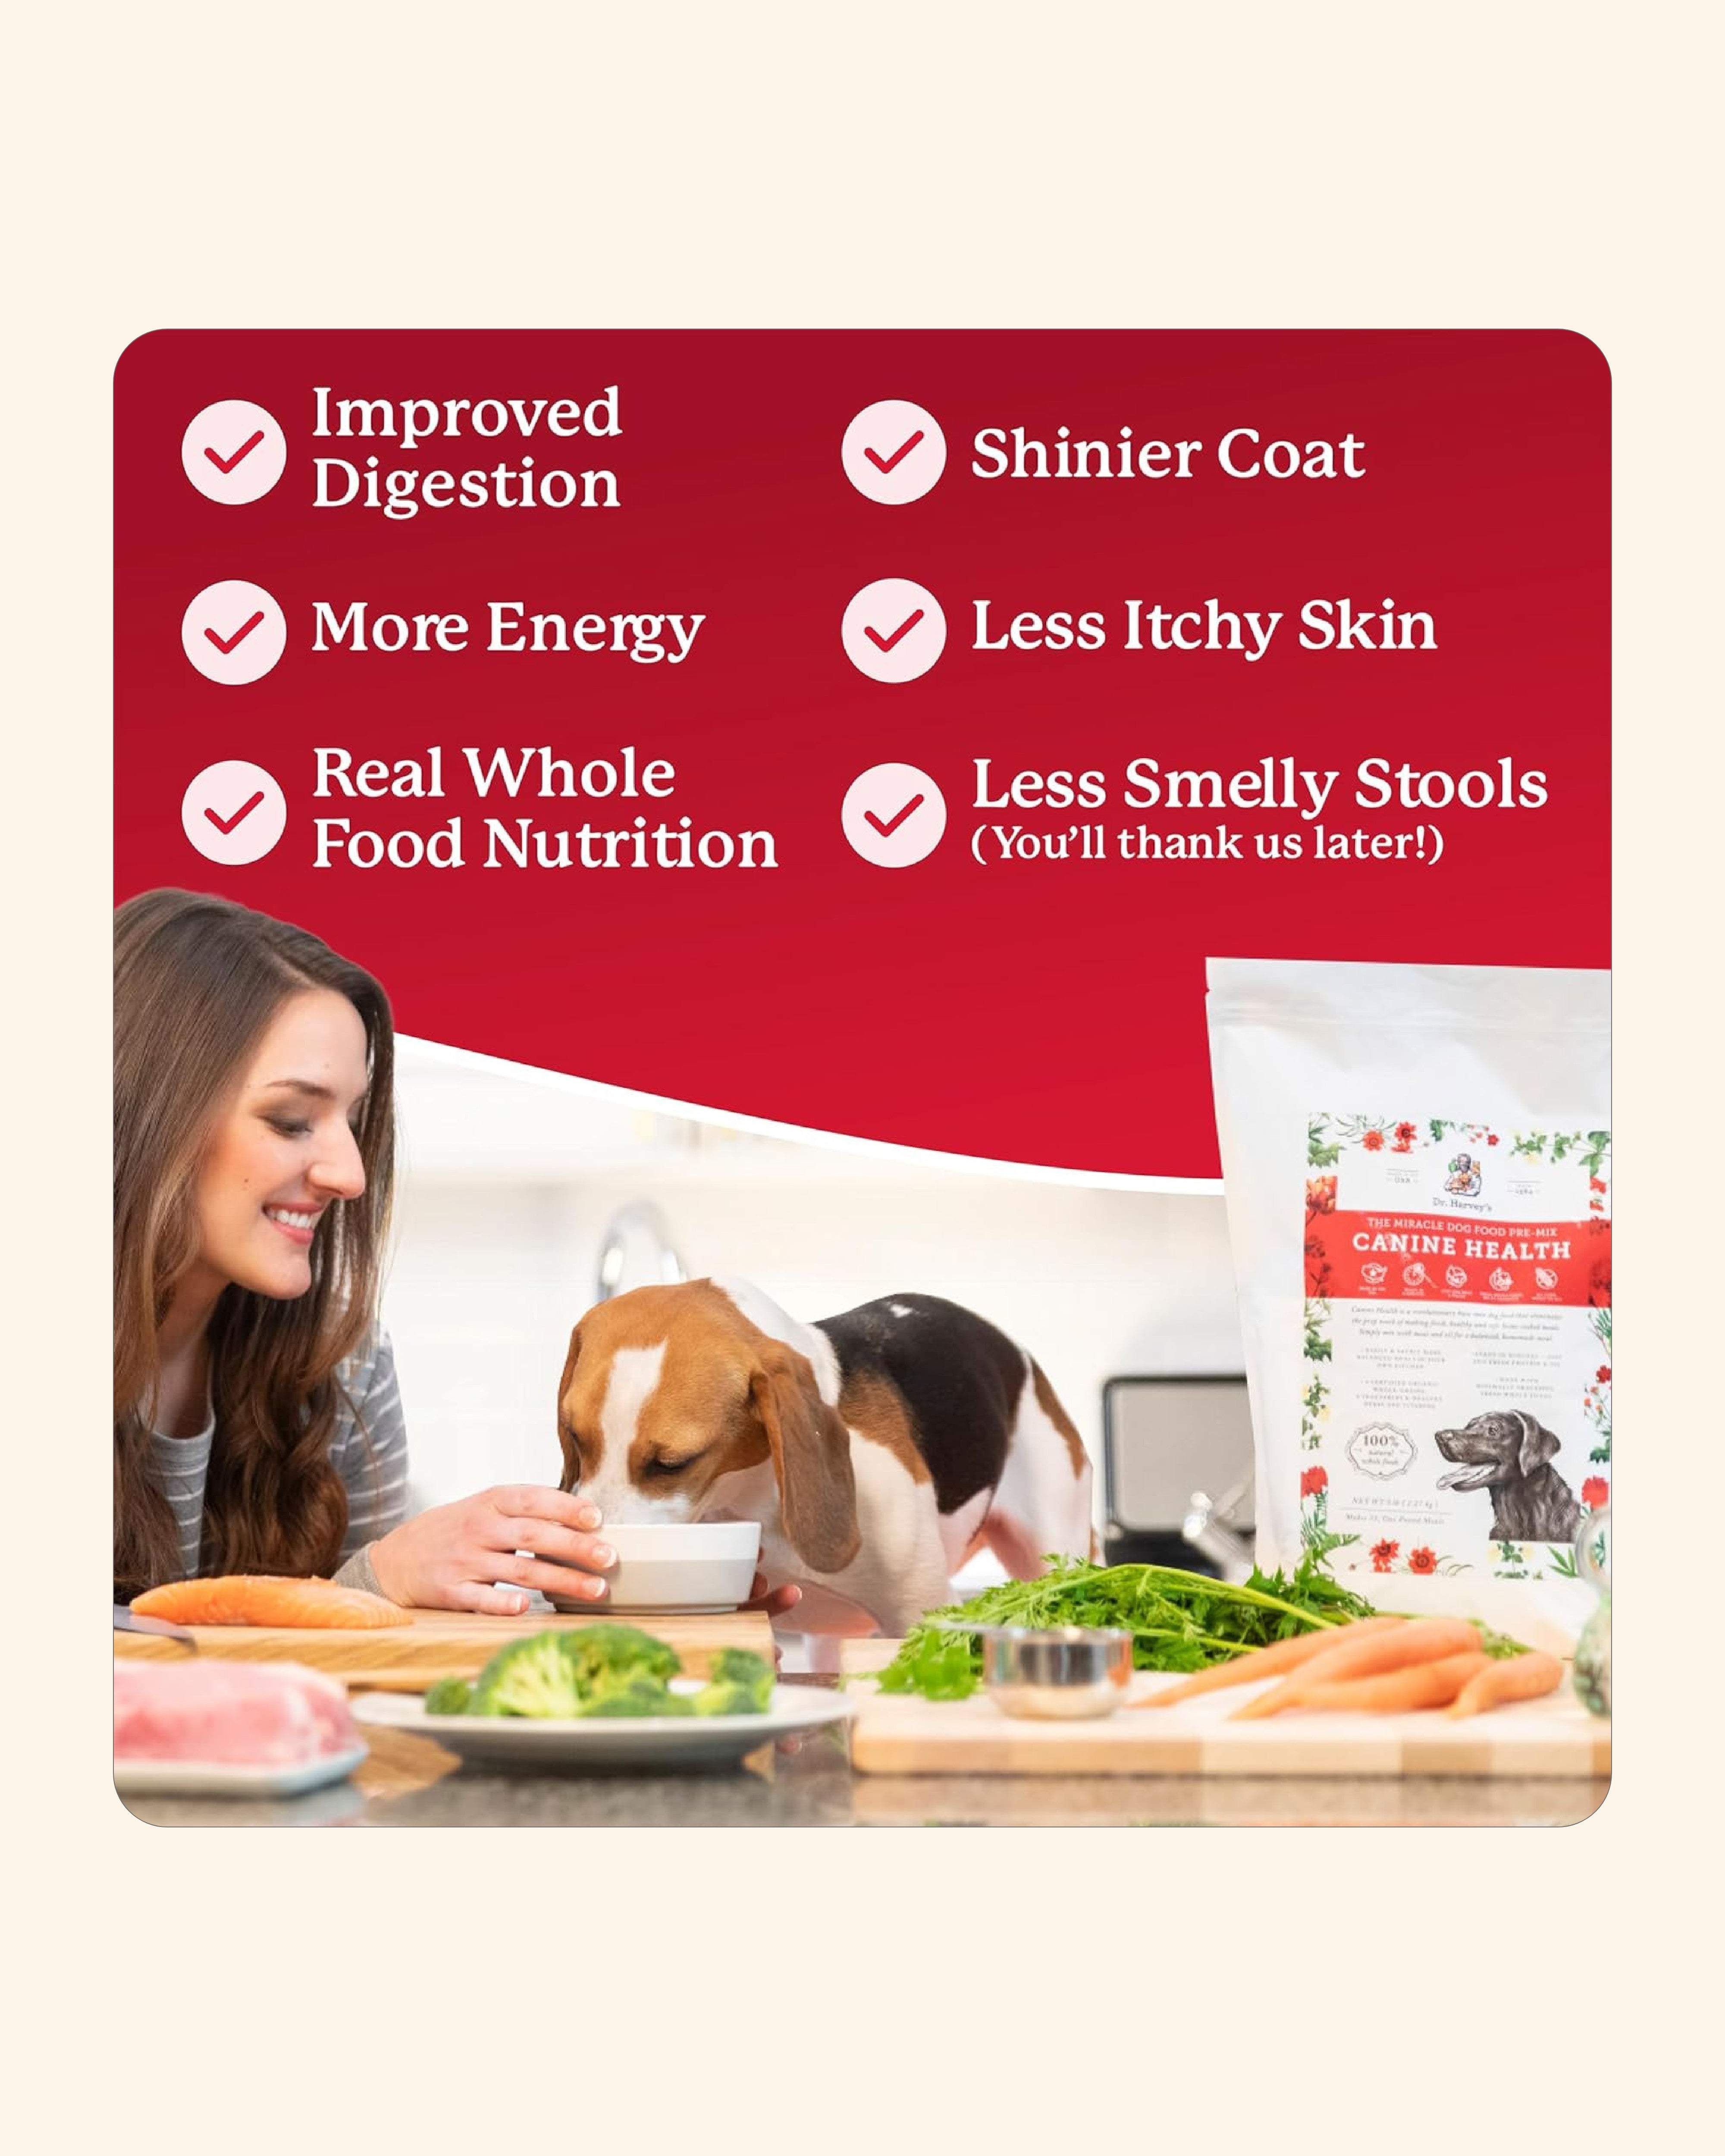 Canine Health (Miracle Dog Food)